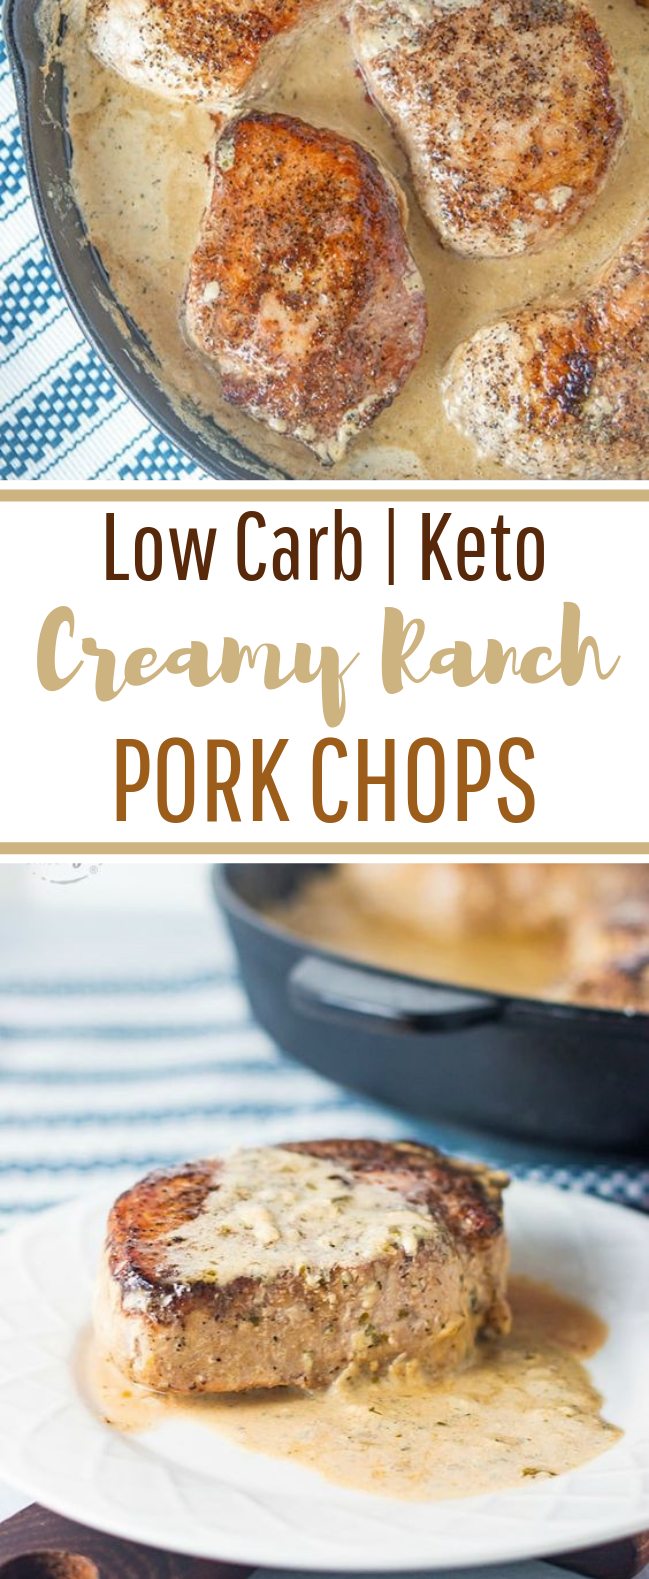 Keto Creamy Ranch Pork Chops #ketogenic #lowcarb